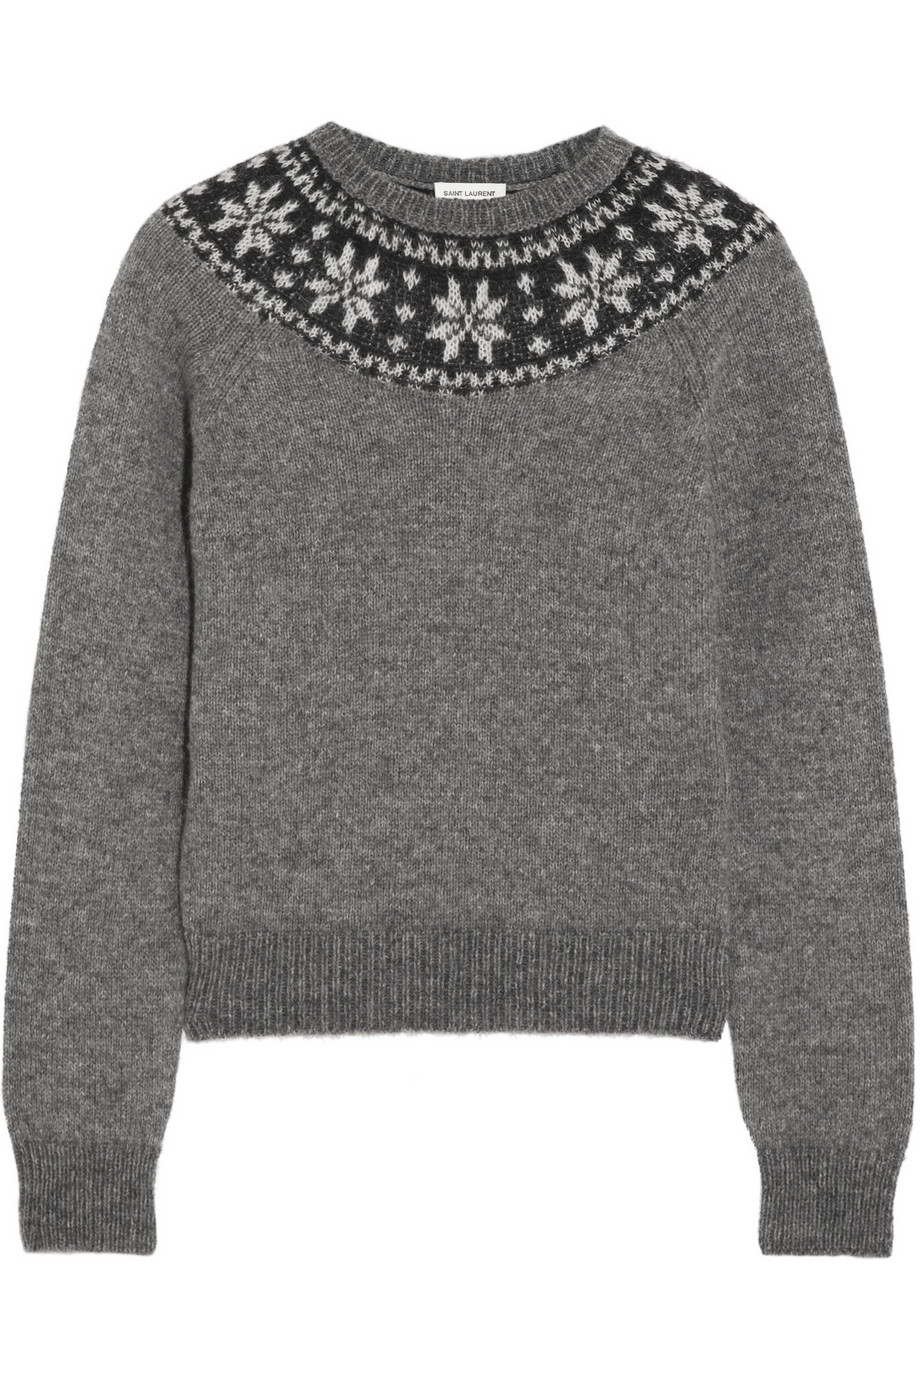 Saint laurent Fair Isle Mohair-Blend Sweater in Gray | Lyst